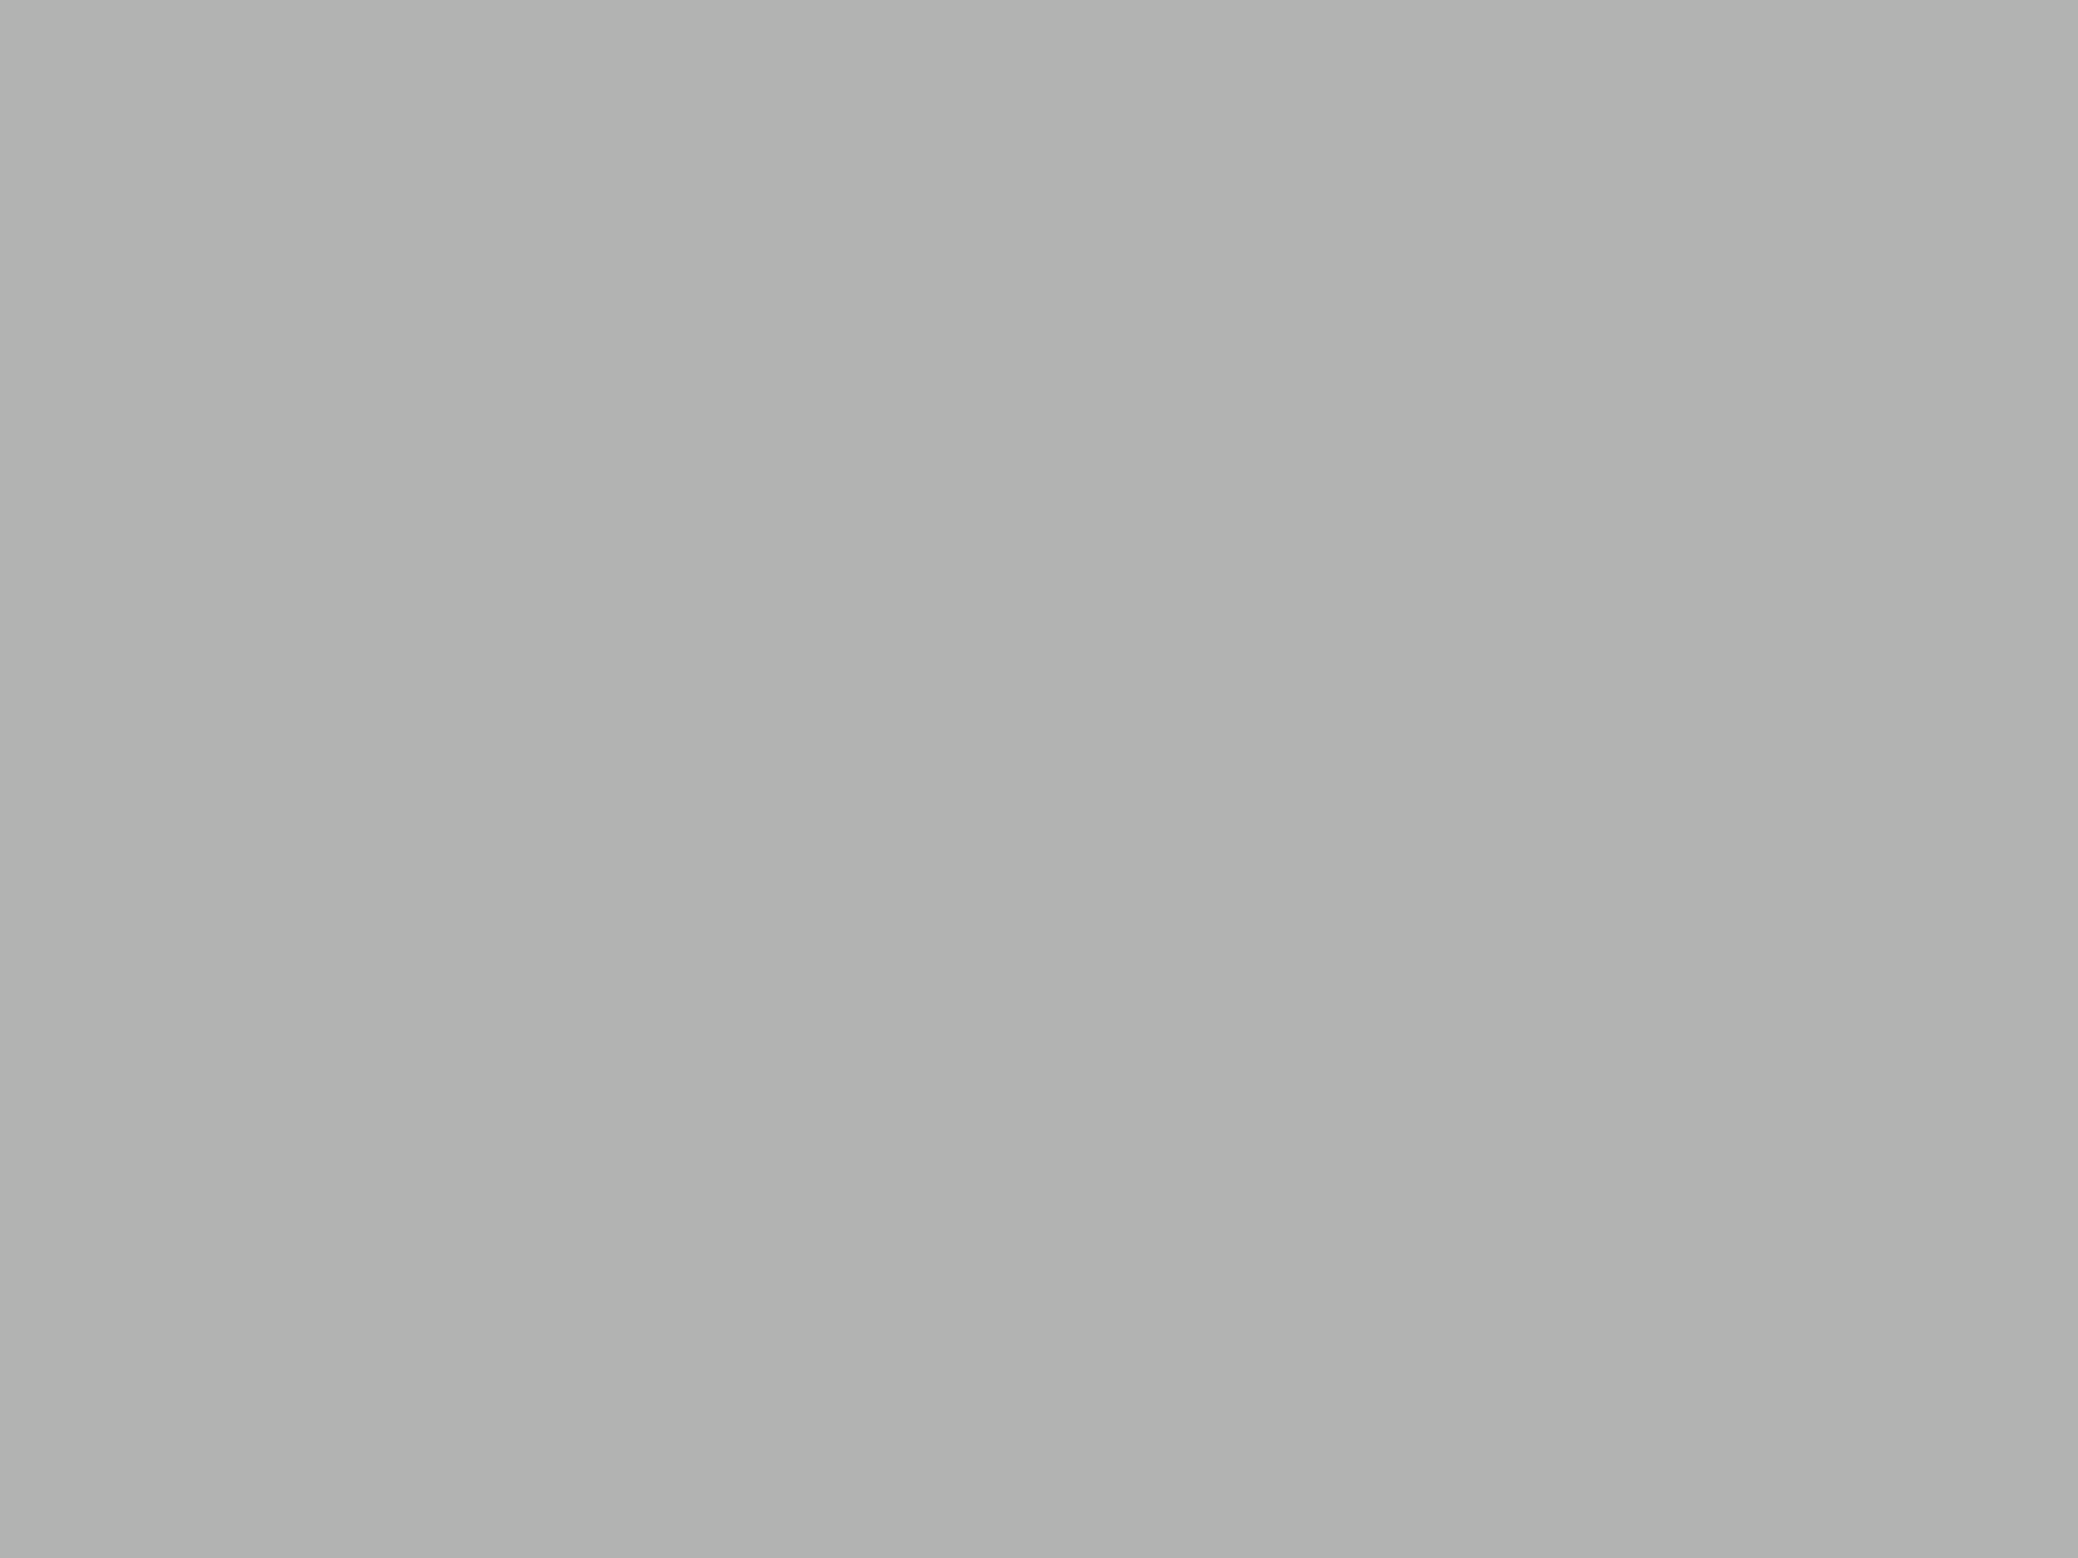 Николаевский вокзал, Санкт-Петербург. Между 1863 и 1864. Фотография: Goffert / <a href="https://commons.wikimedia.org/w/index.php?curid=13215771" target="_blank" rel="noopener">commons.wikimedia</a> / Public Domain